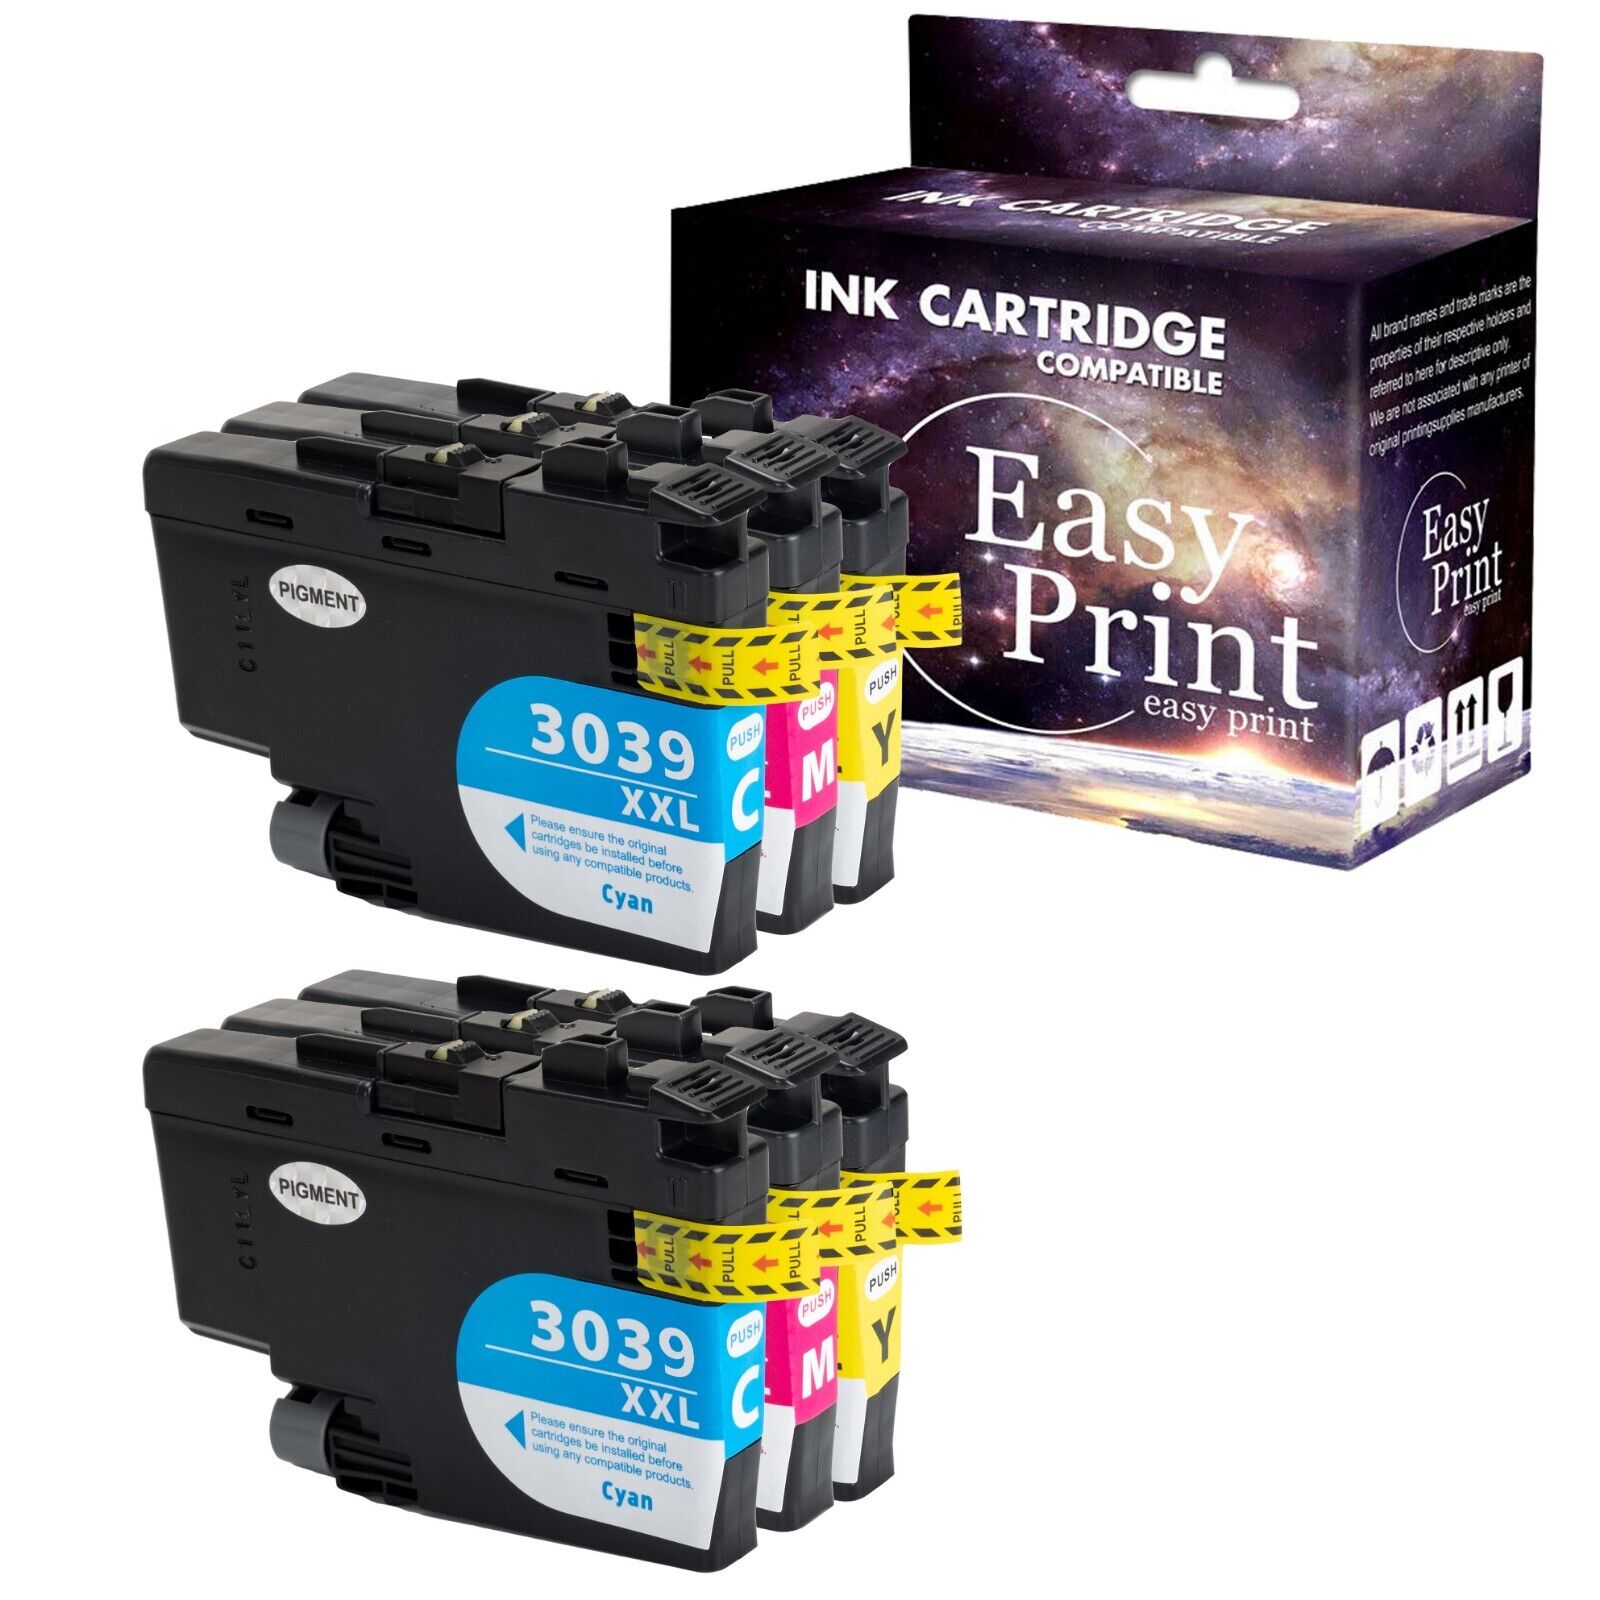 6PK LC3039 3039XXL Ink Cartridge for MFC-J6545DW XL MFC-J5845DW Printer